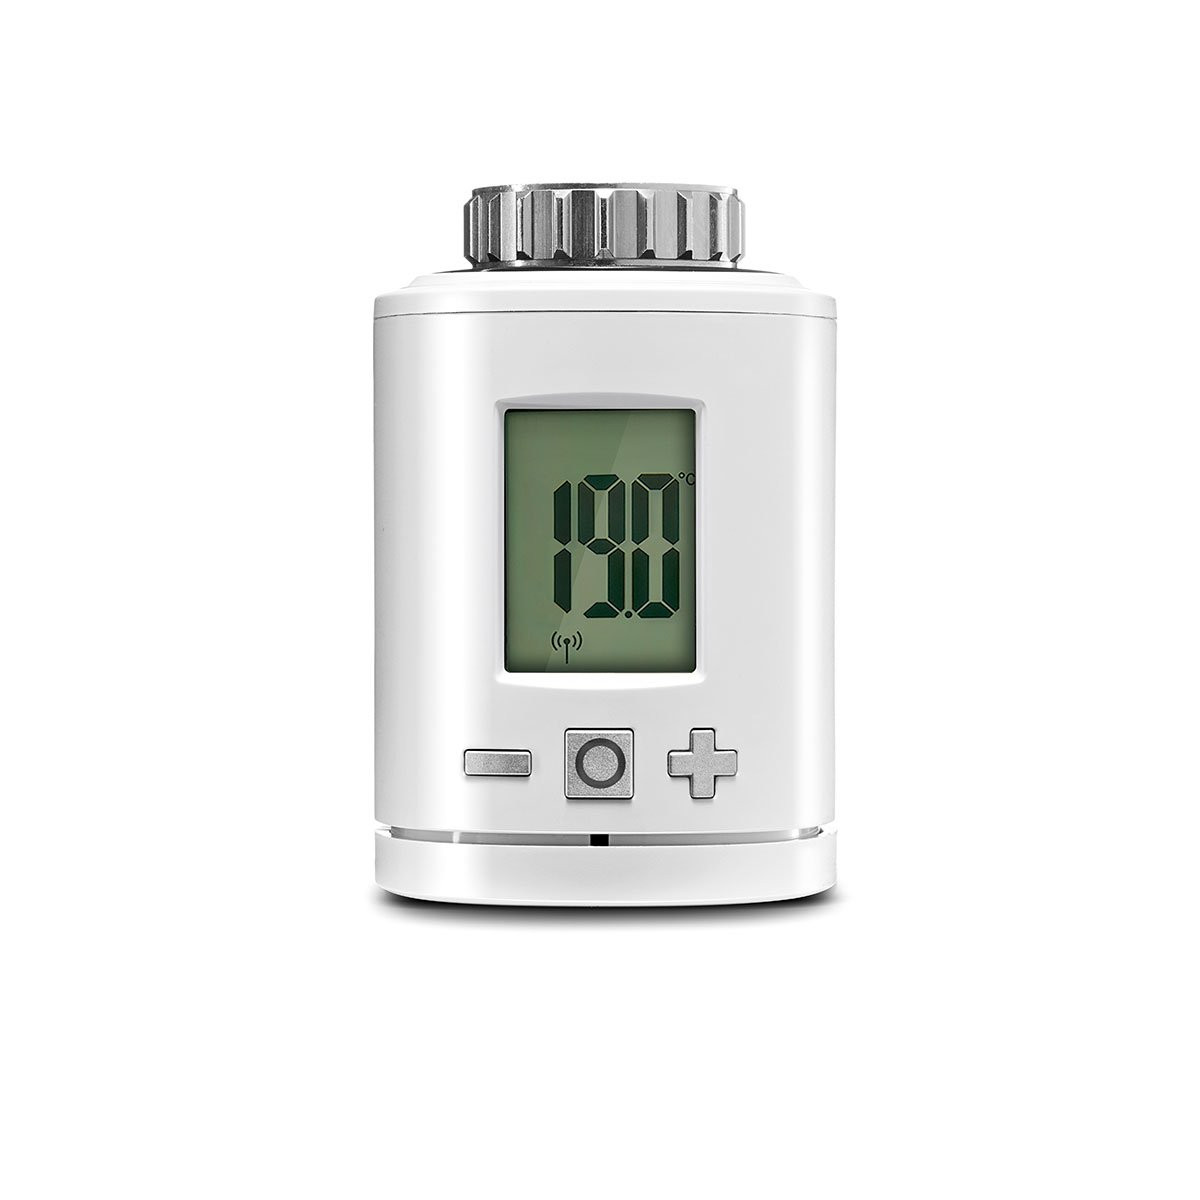 Gigaset Thermostat ONE X (3-er Pack)